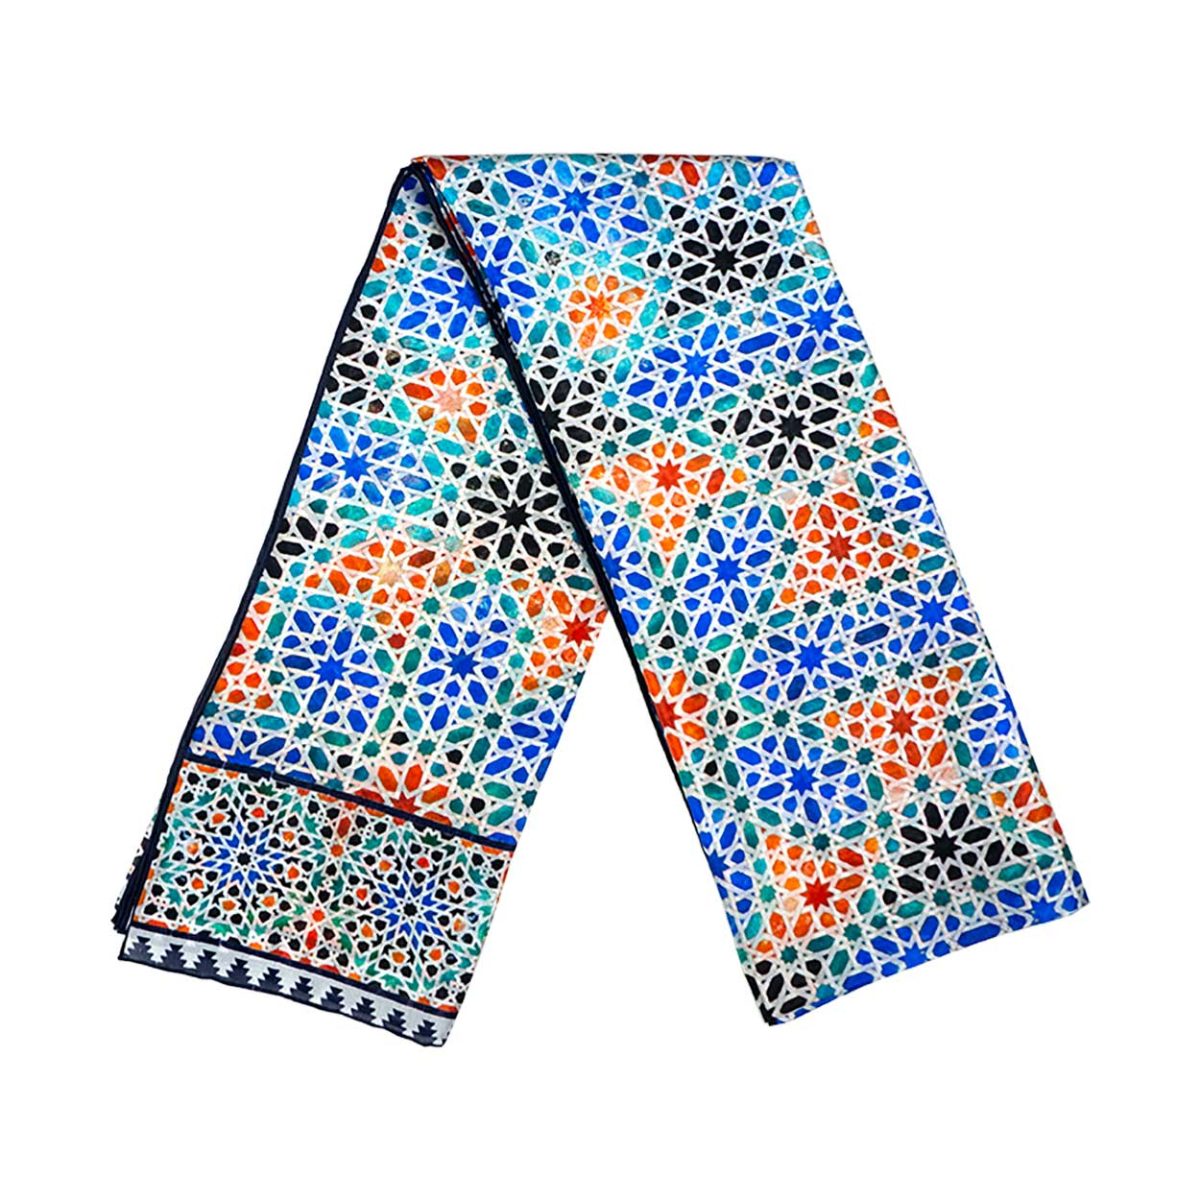 Multicolored silk scarf featuring Islamic Art print